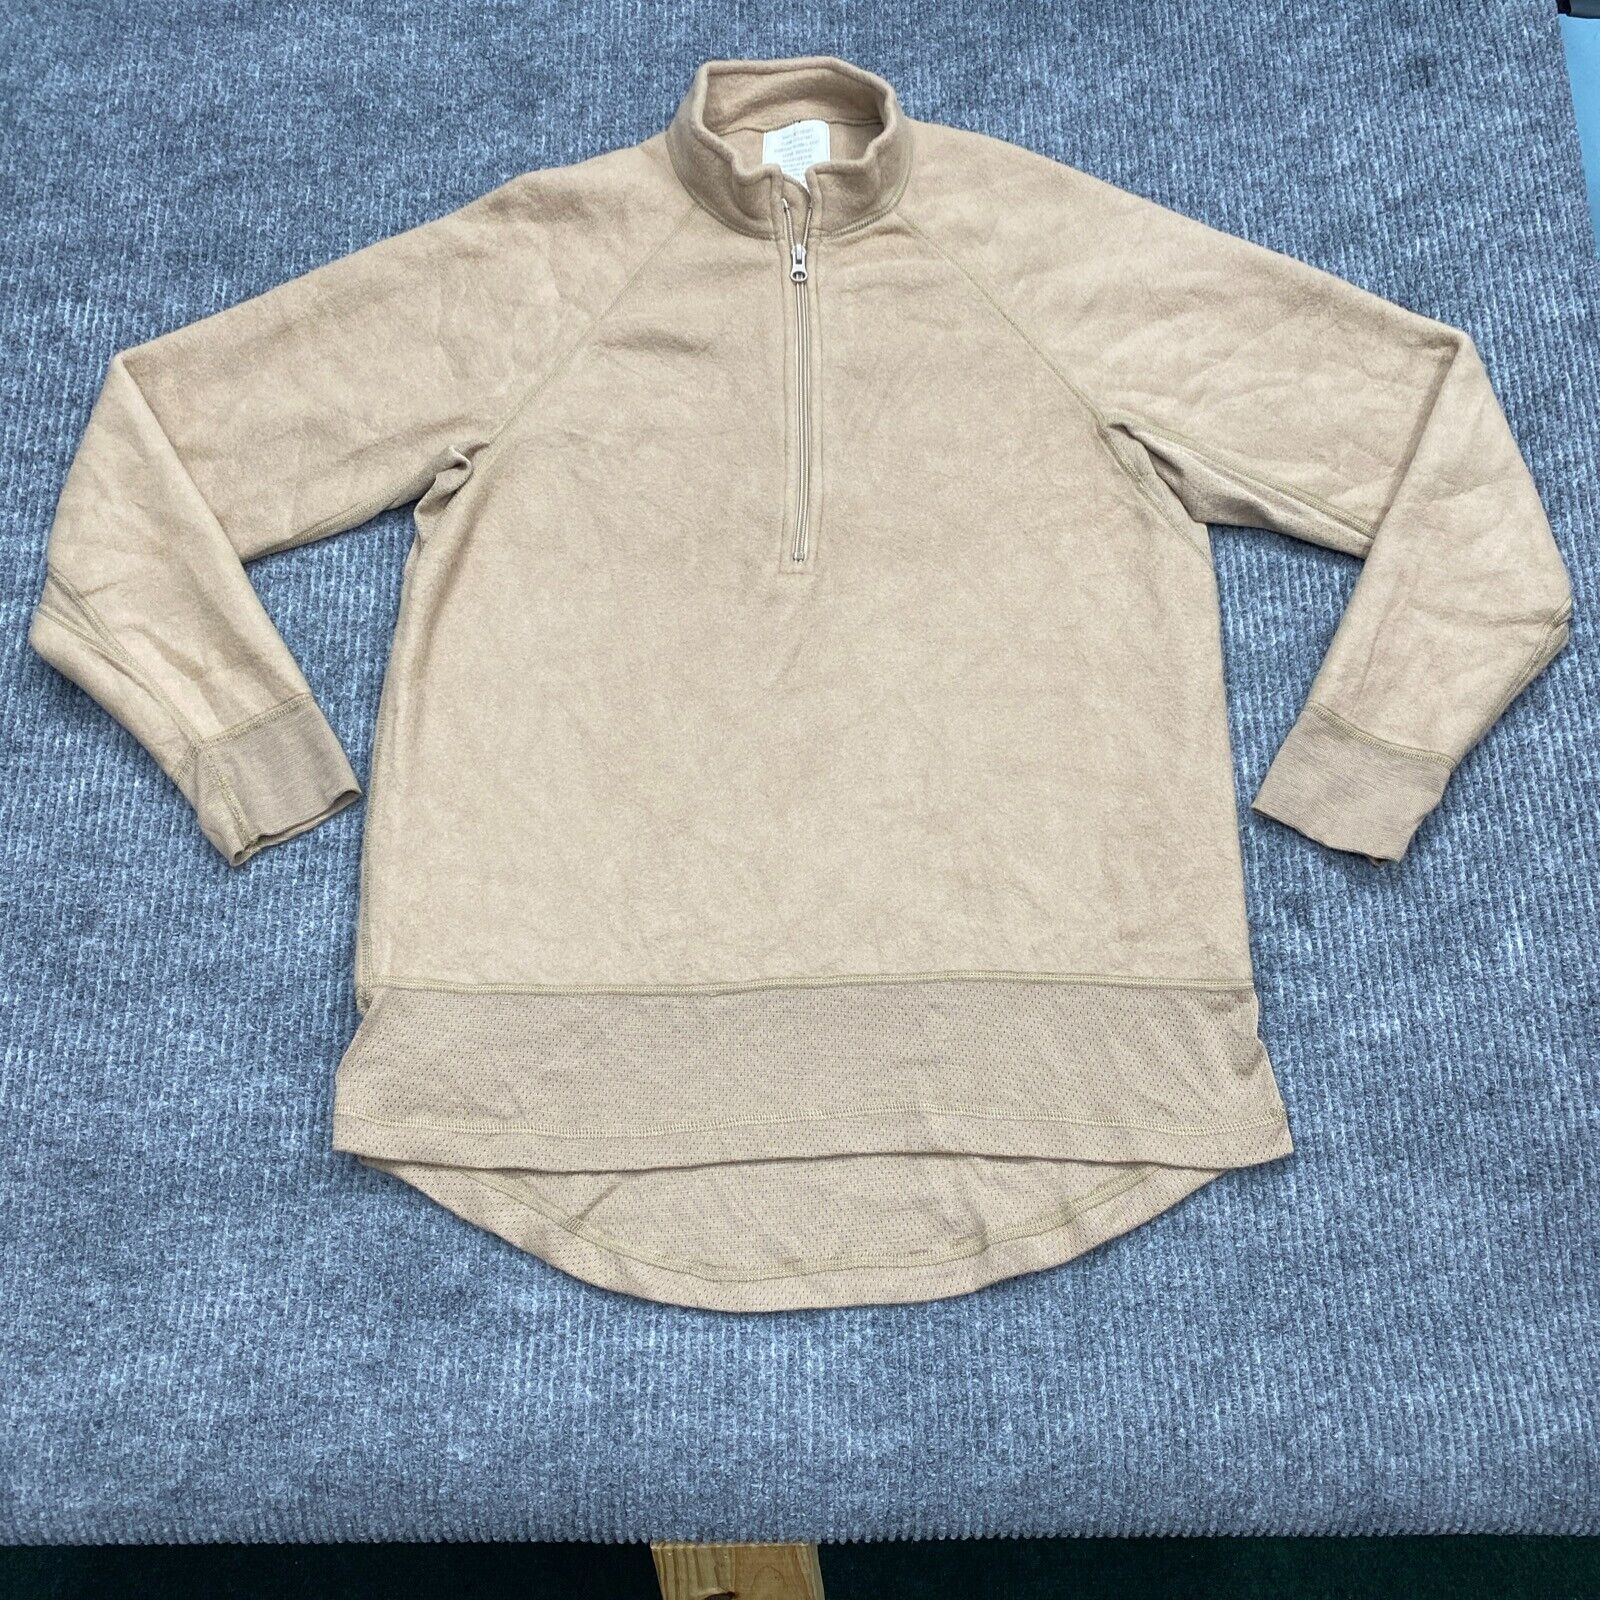 USGI Polartec Fire Resistant Nomex Fleece Shirt Mid-Weight Layer Large Beige Tan